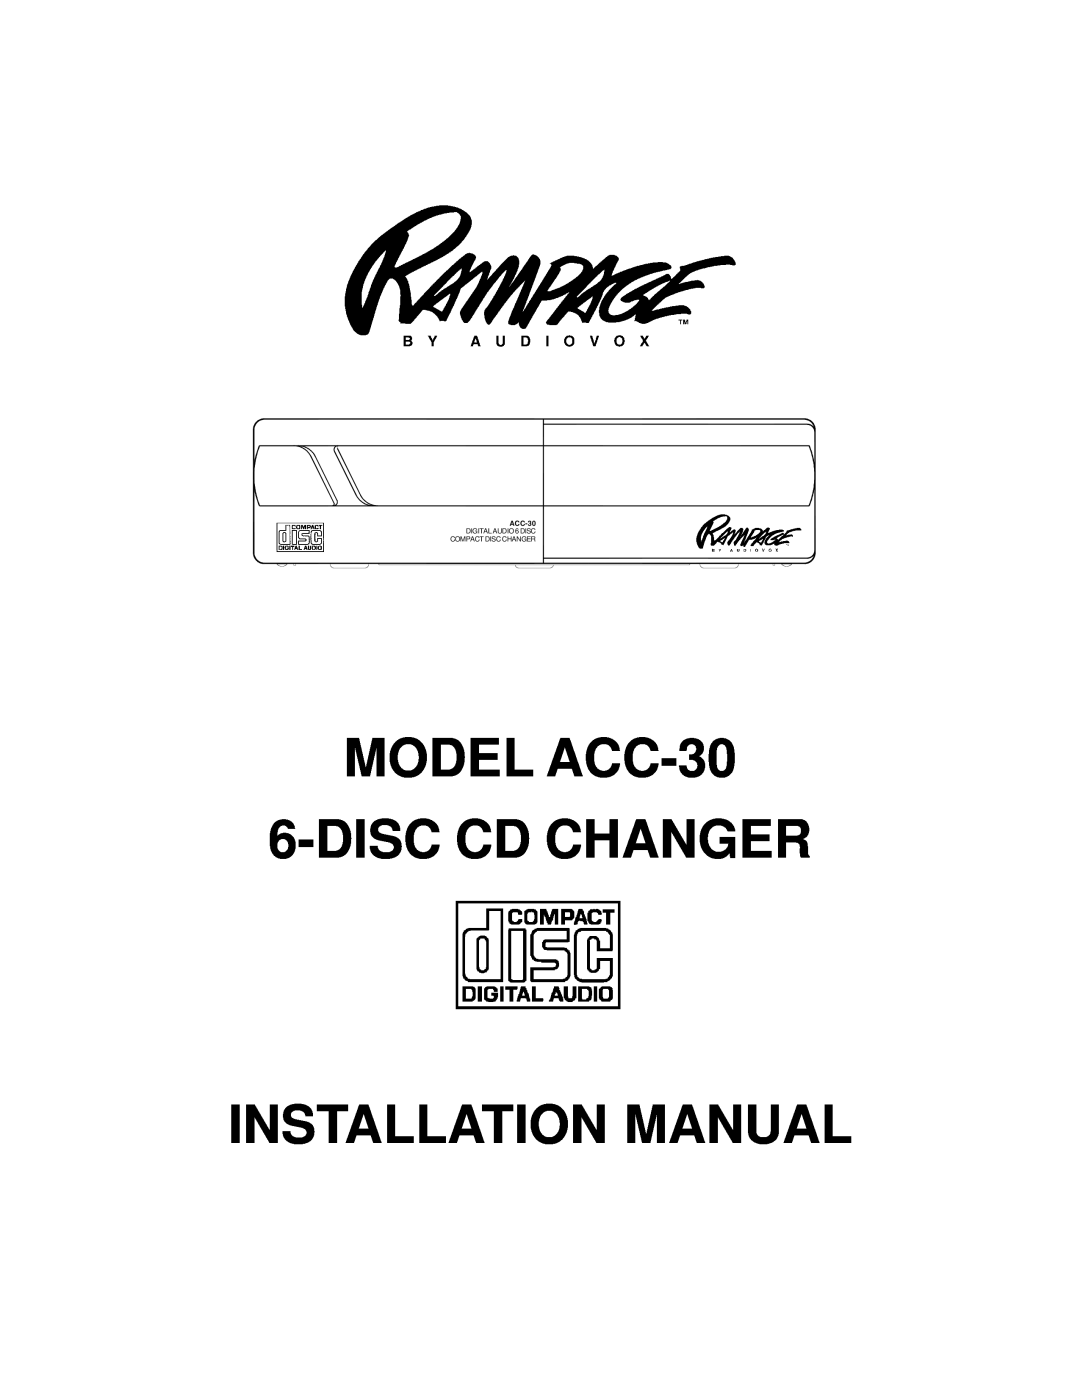 Audiovox installation manual MODEL ACC-30 6-DISC CD CHANGER INSTALLATION MANUAL, DIGITAL AUDIO 6 DISC 